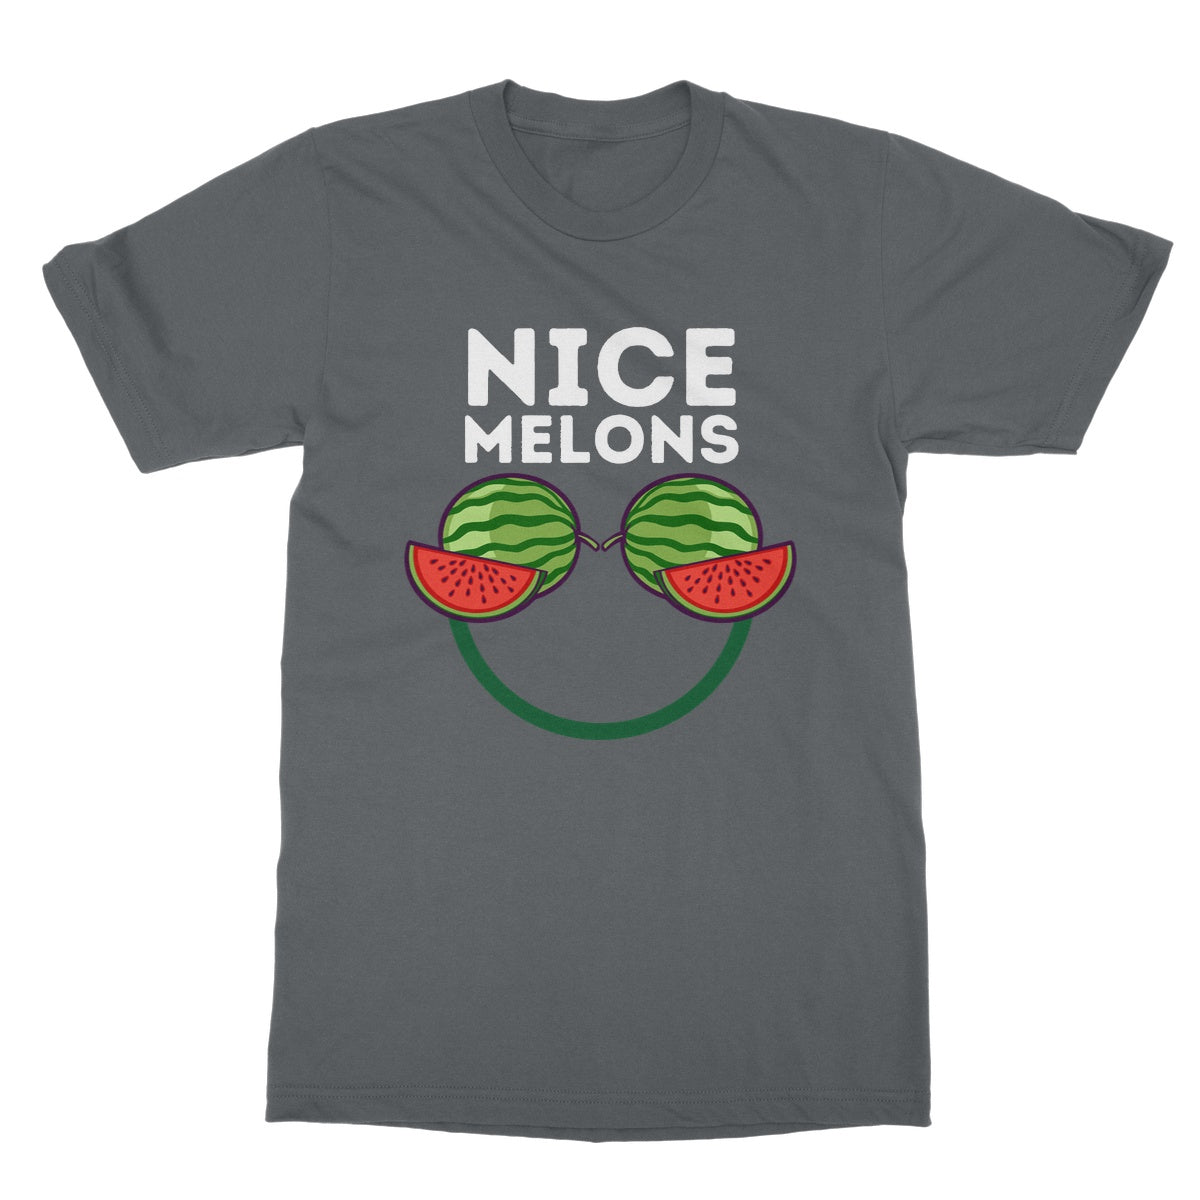 nice melons t shirt dark grey